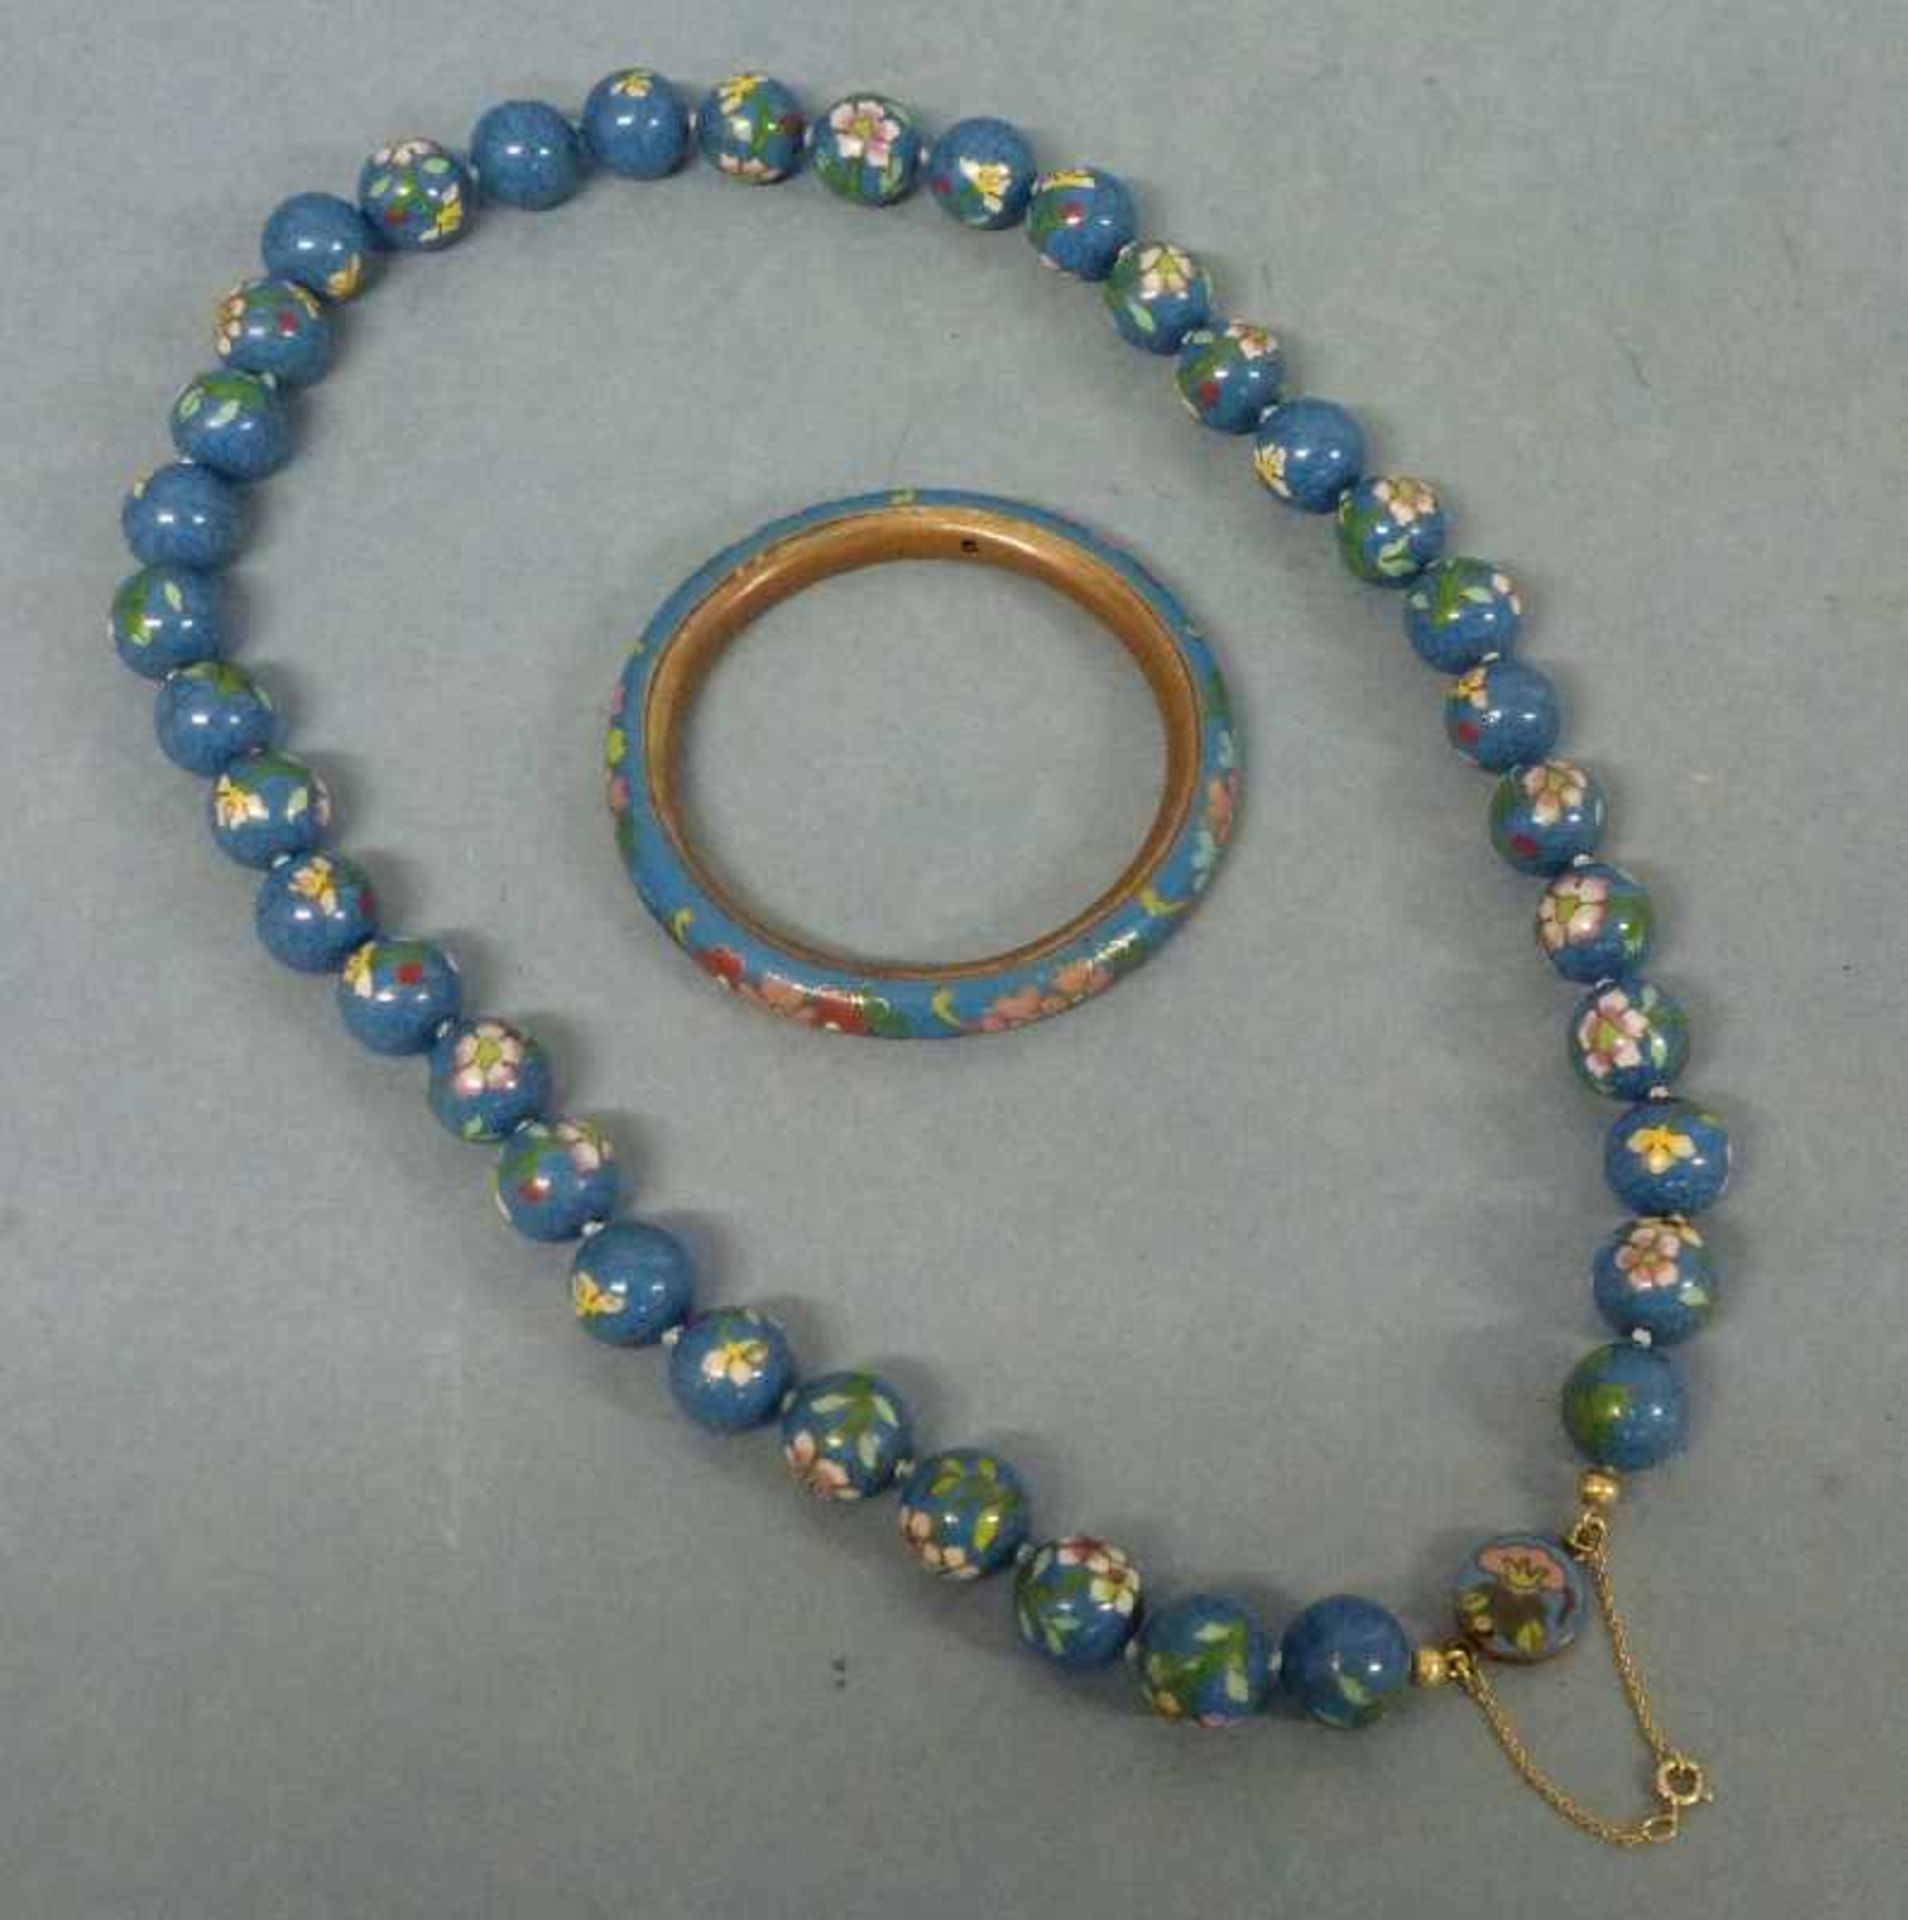 Collierkette und Armreif Cloisonné-Perlen blau mit Blüten, passender runder Armreif (2xbech.), L/